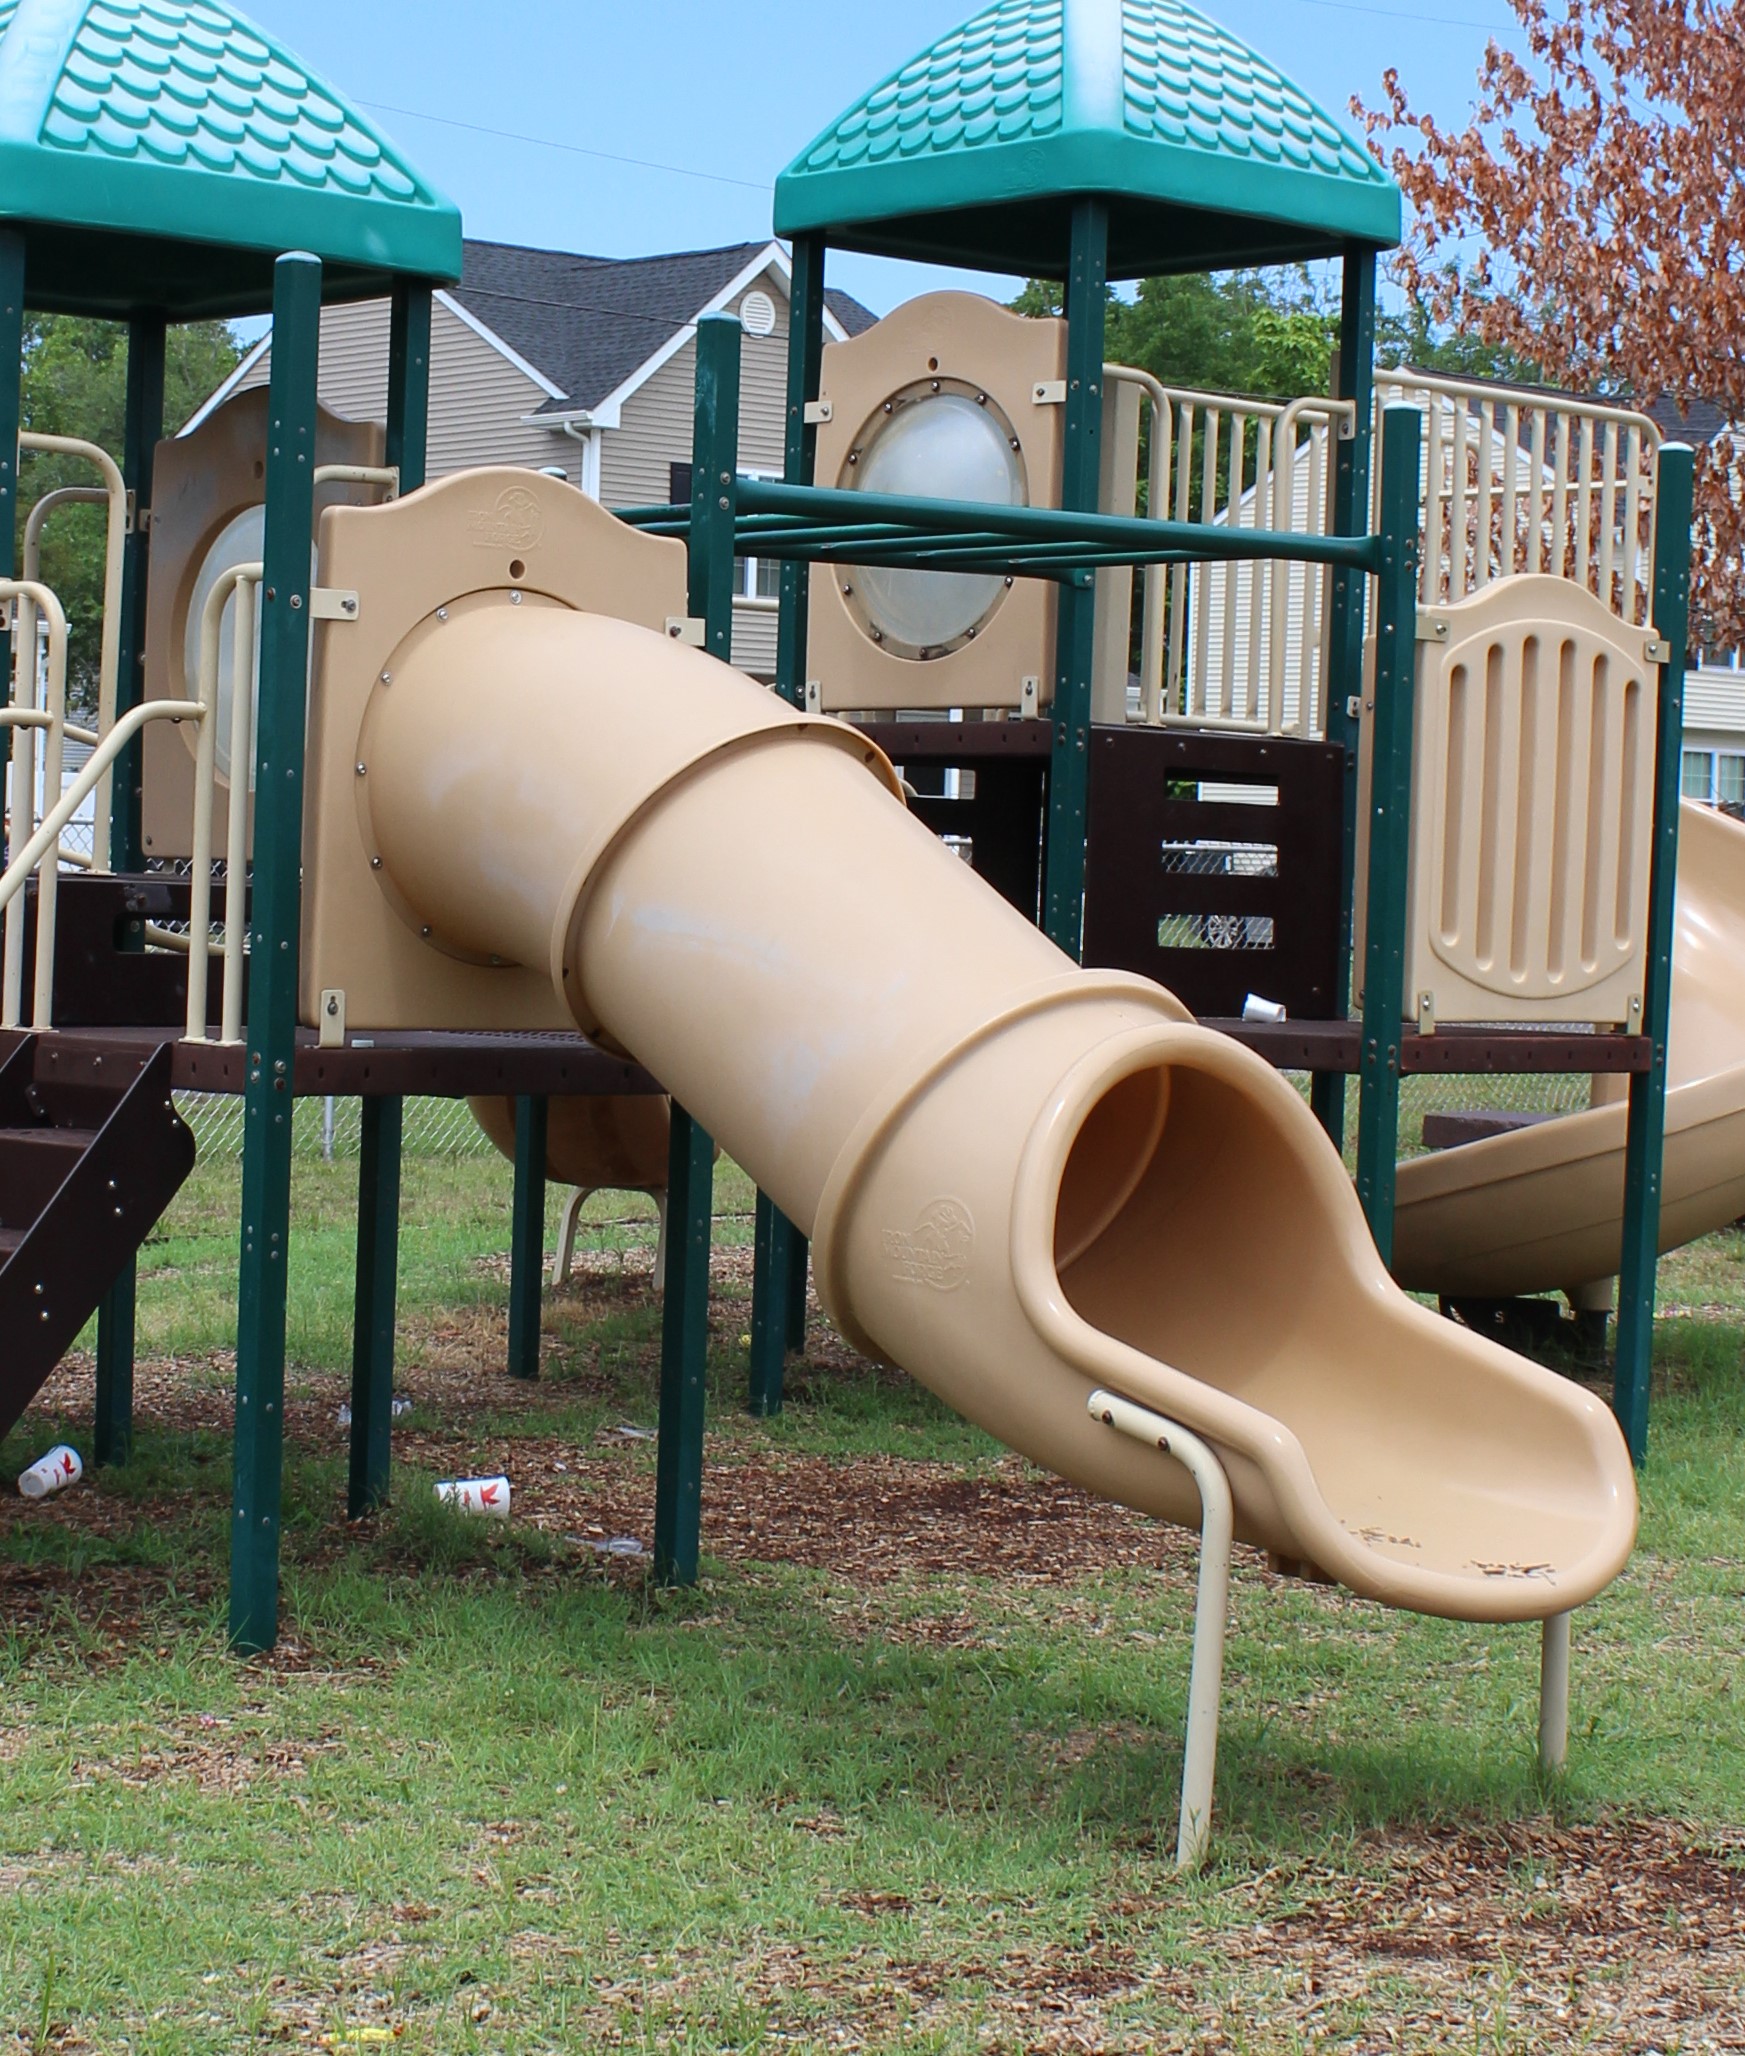 Friendship Park Playground in Millville NJ - SLIDE - tunnel slide